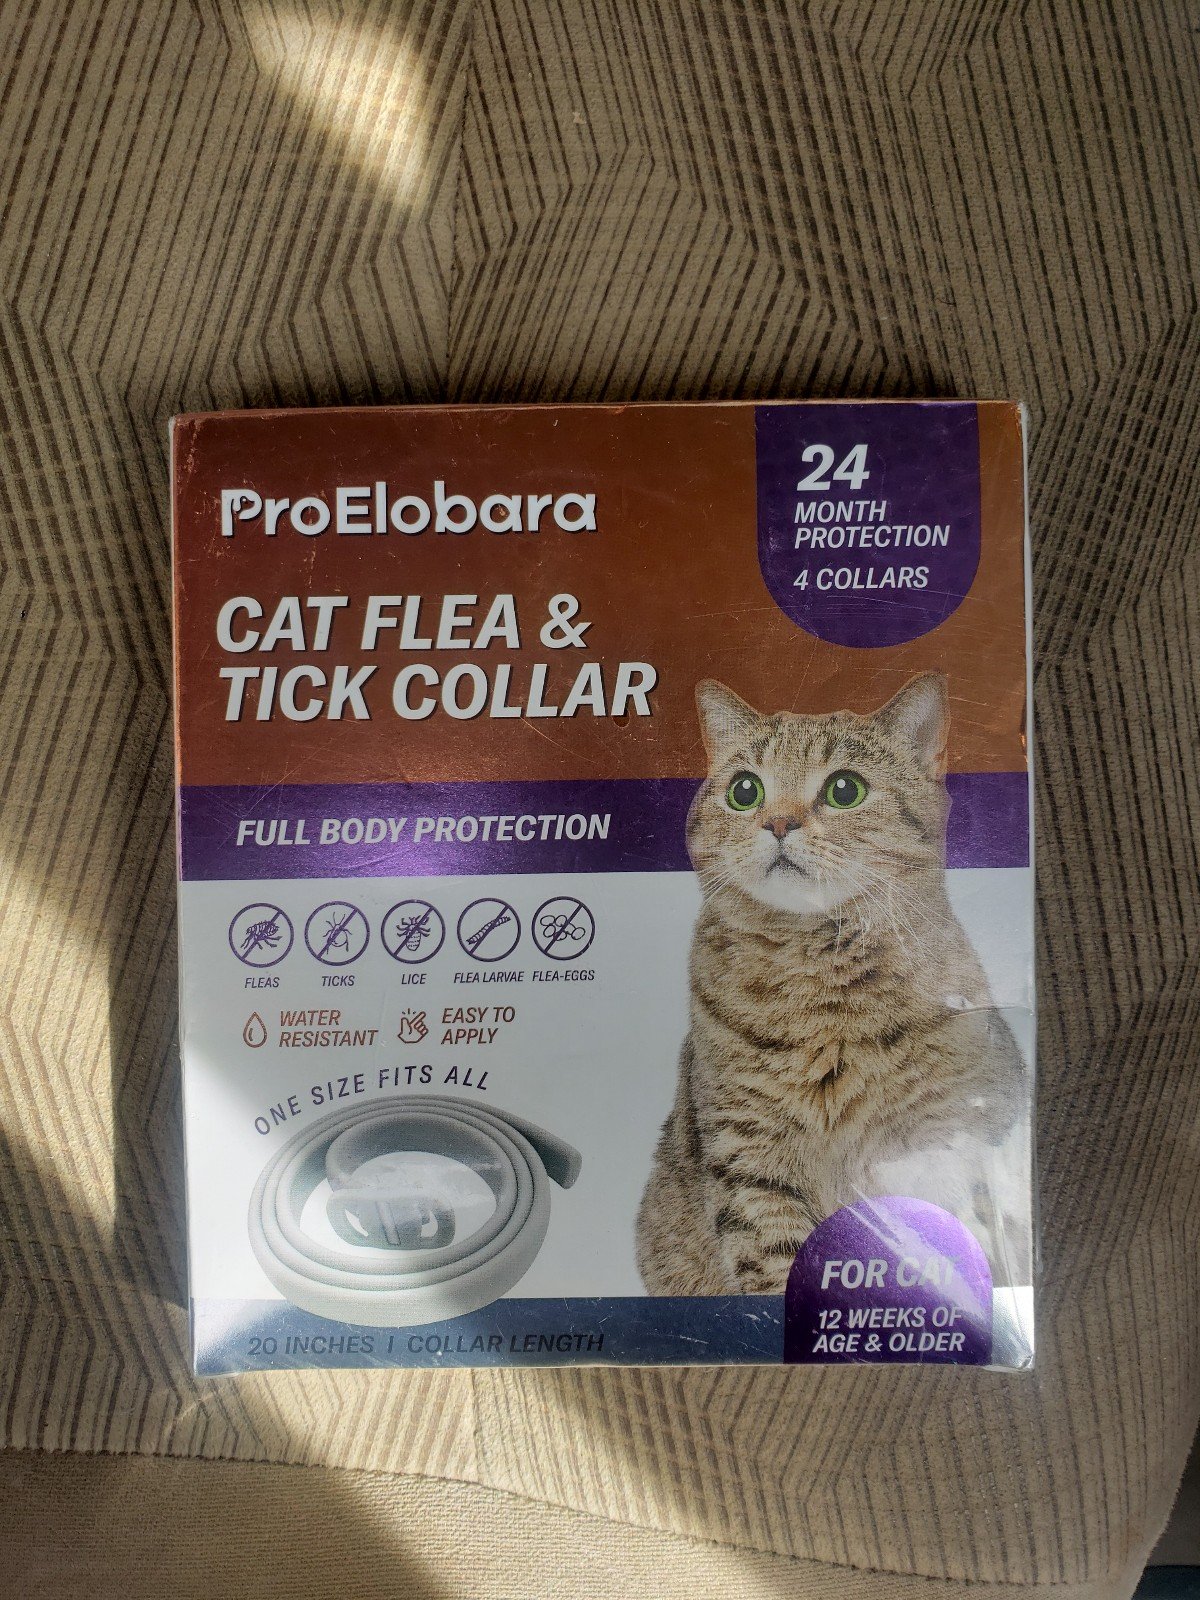 Cat Flea & Tick Collar 2JY9oNPmq